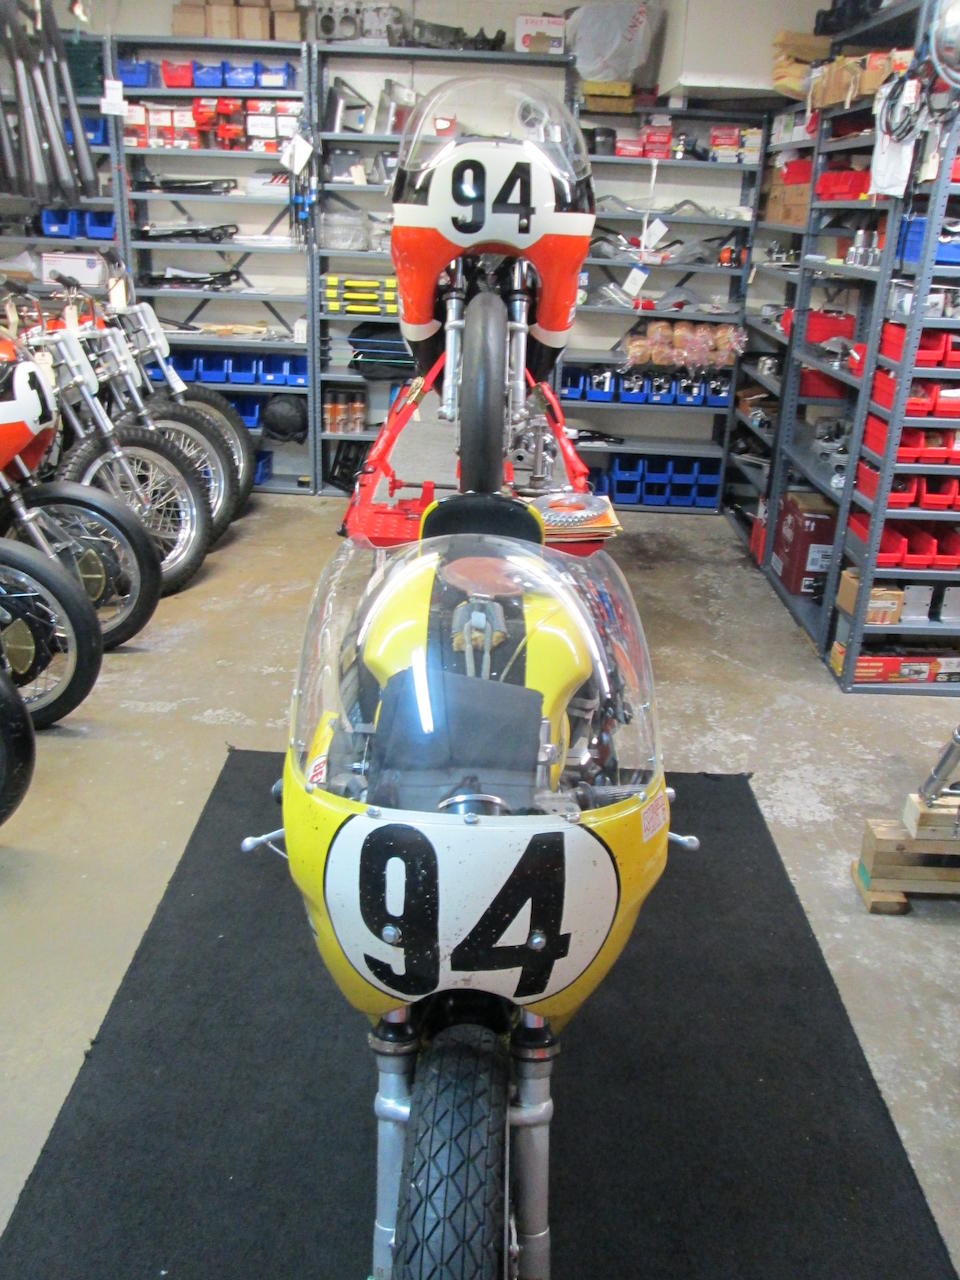 As raced, ex-Larry Darr factory support bike,1970 Harley-Davidson XRTT 750cc Road Racer